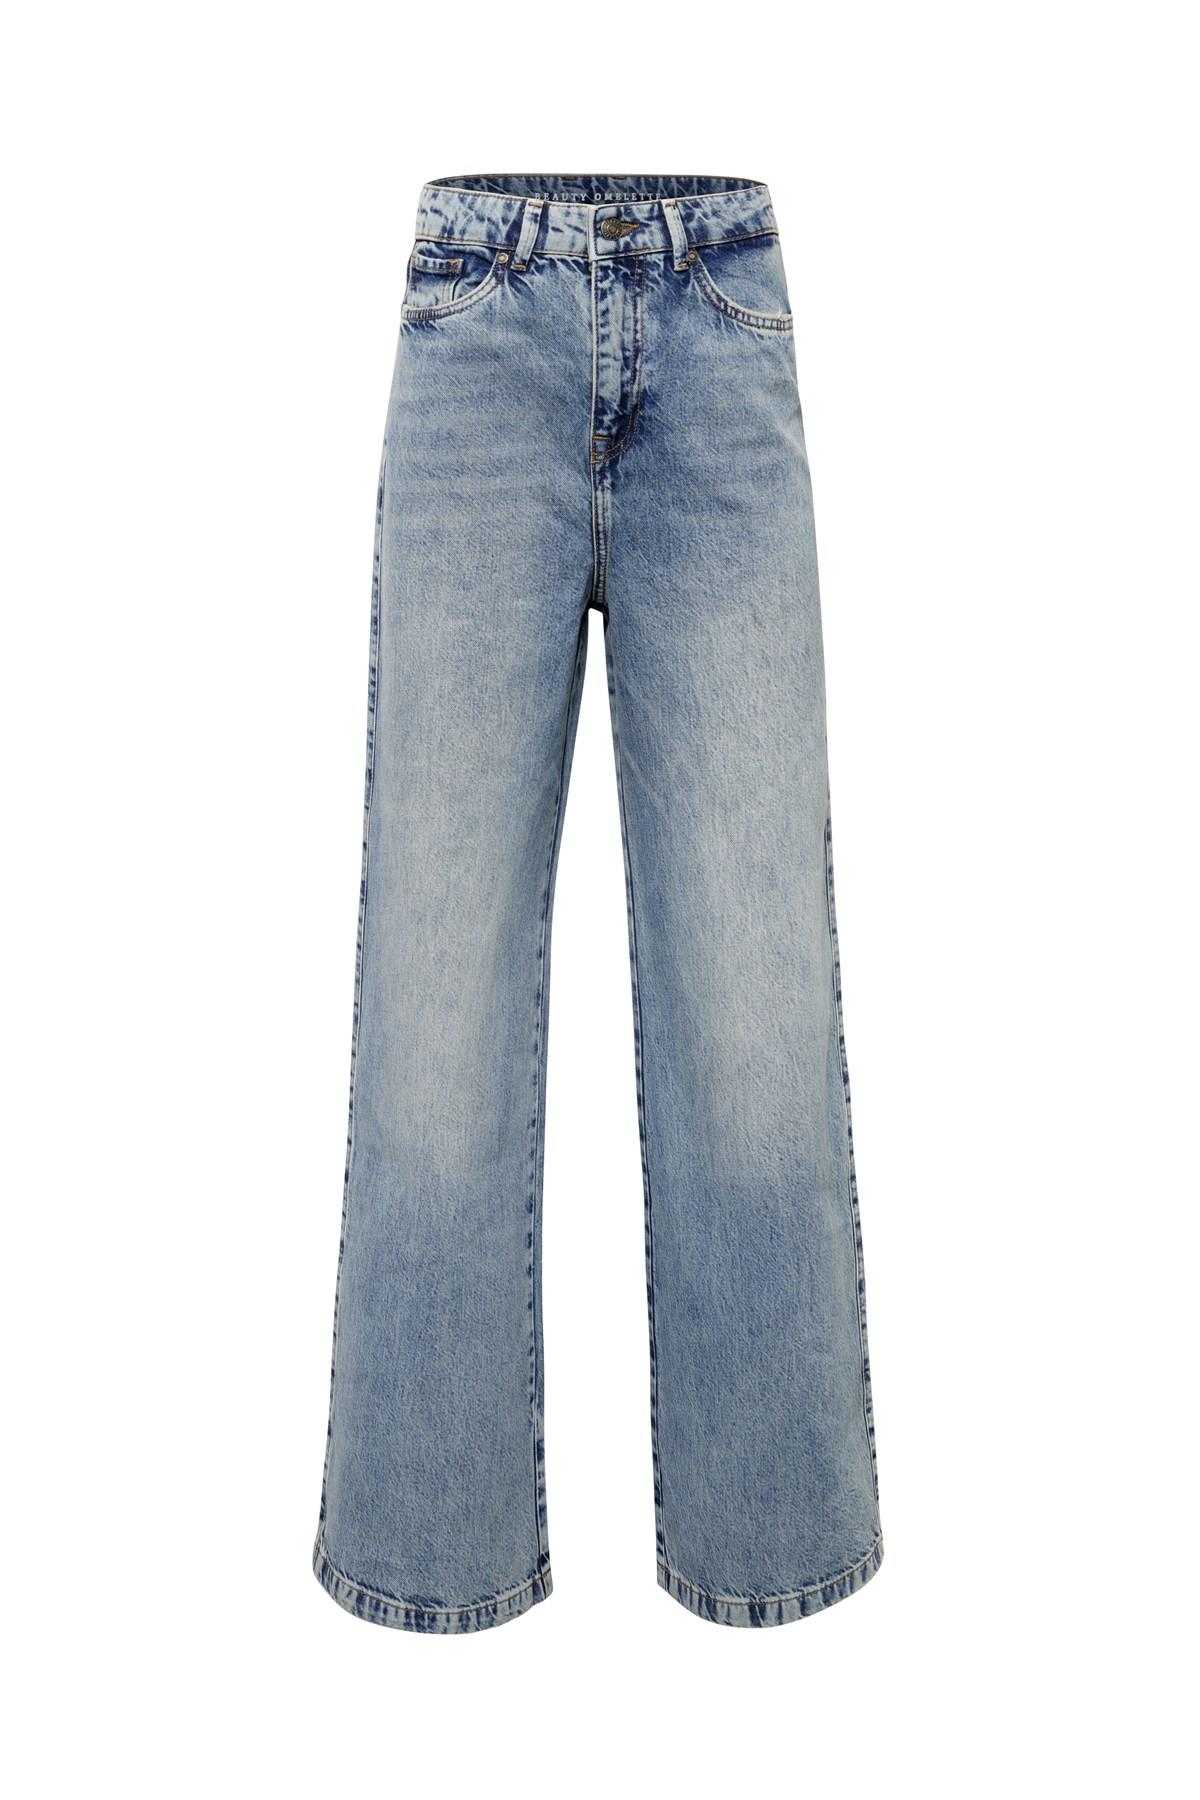 Mavi Low Waist Full Length Jean